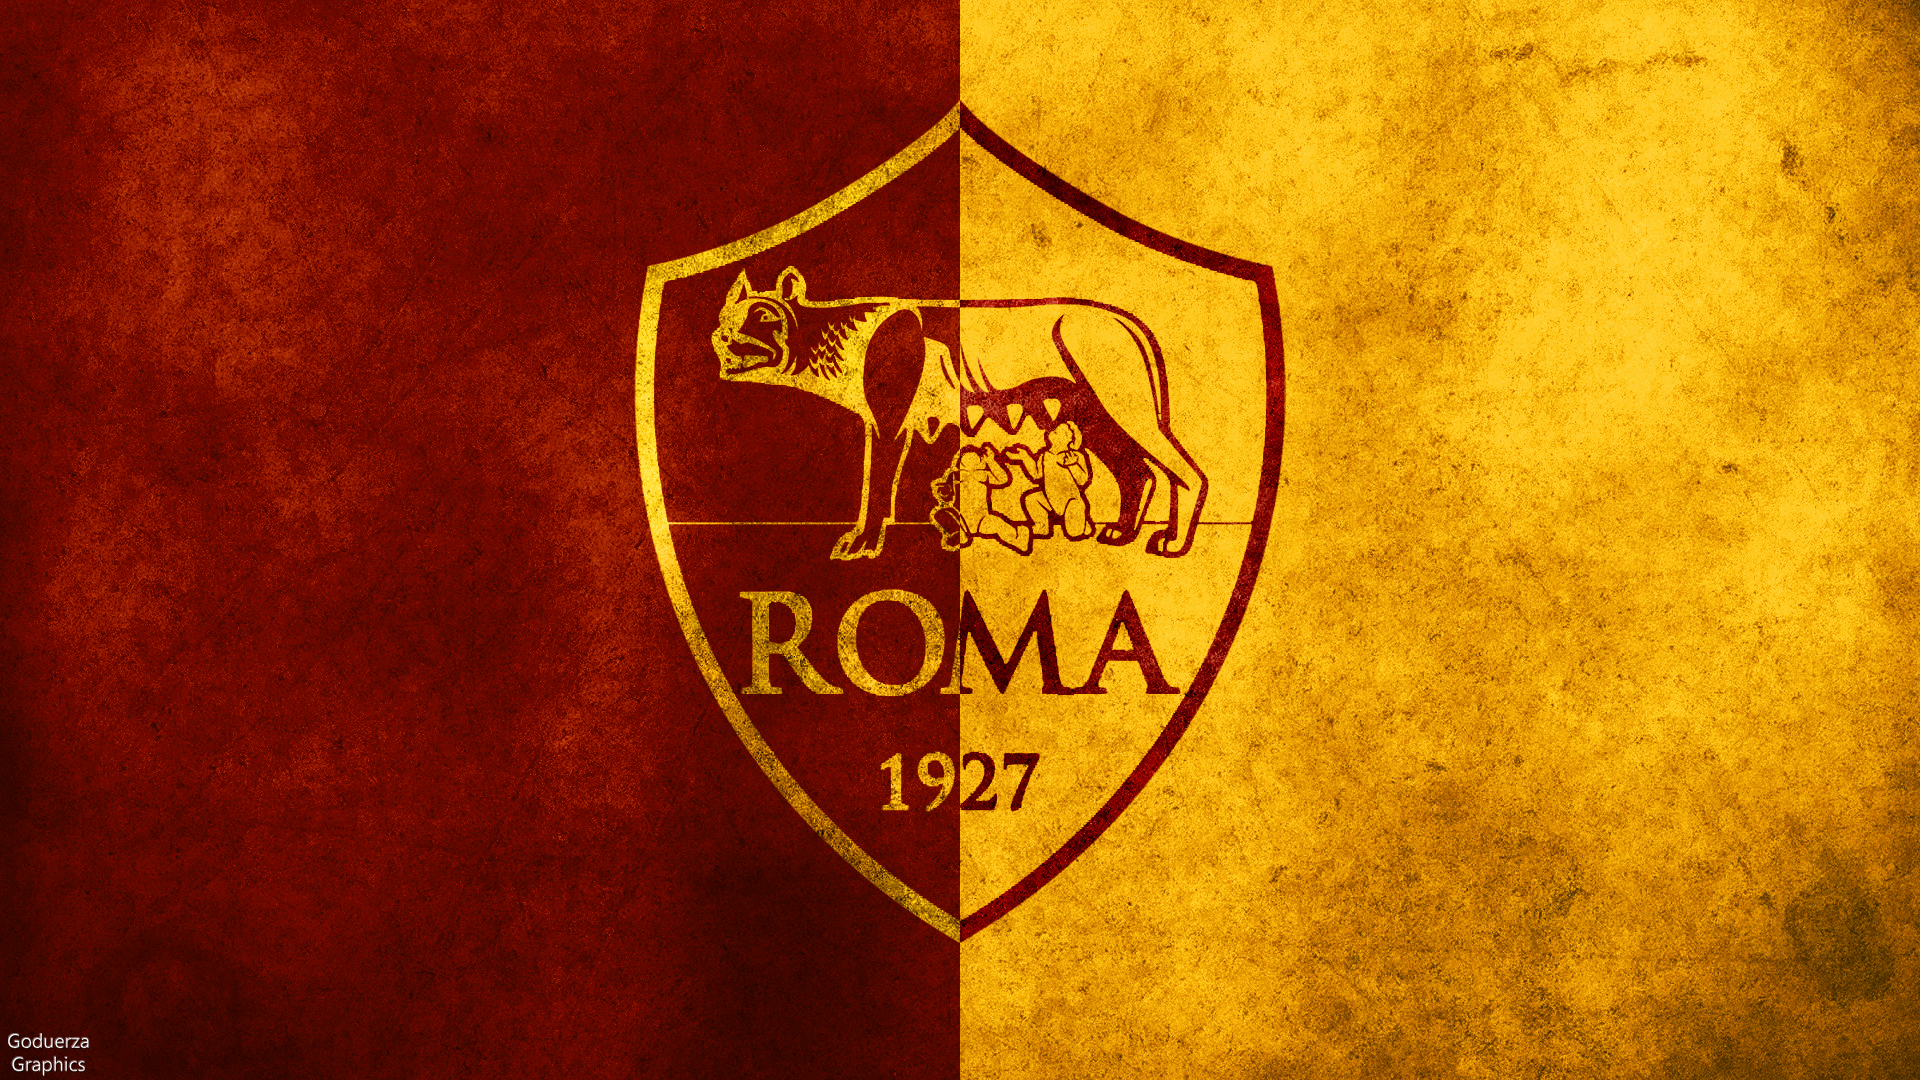 504432 descargar imagen como roma, deporte, emblema, logo, fútbol: fondos de pantalla y protectores de pantalla gratis